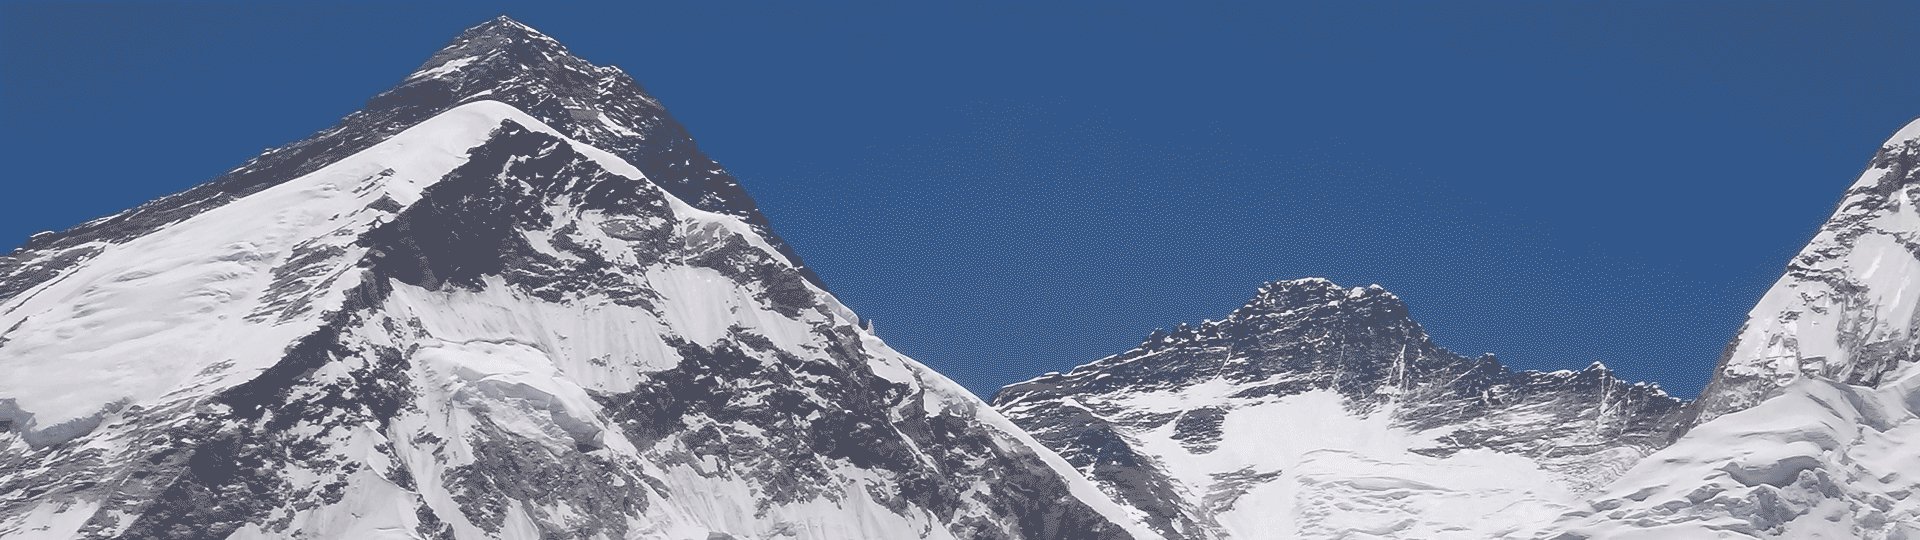 Stazione sismologica Everest (EvK2-CNR)